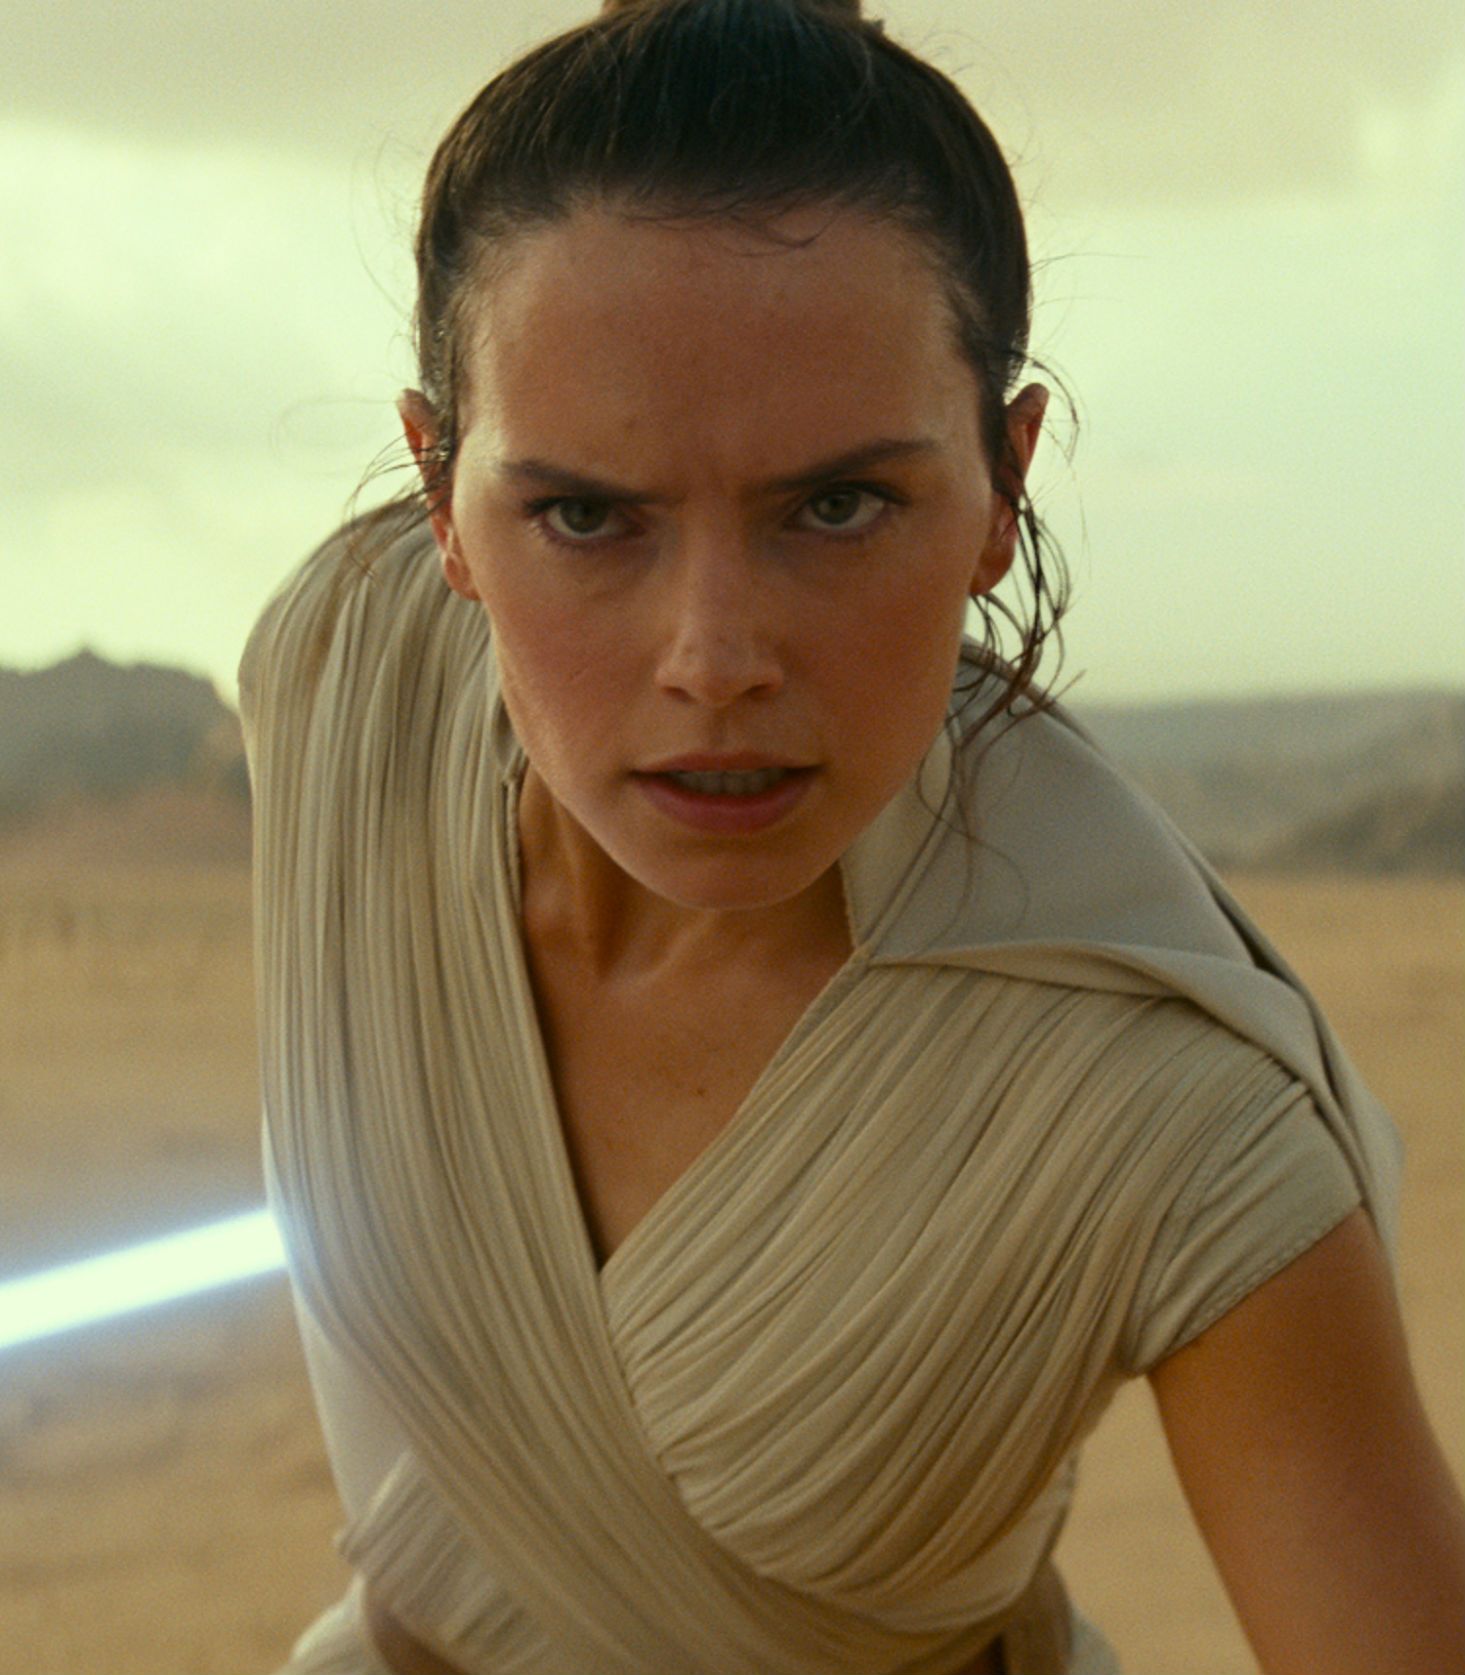 Star Wars The Rise of Skywalker Trailer - Rey Vertical